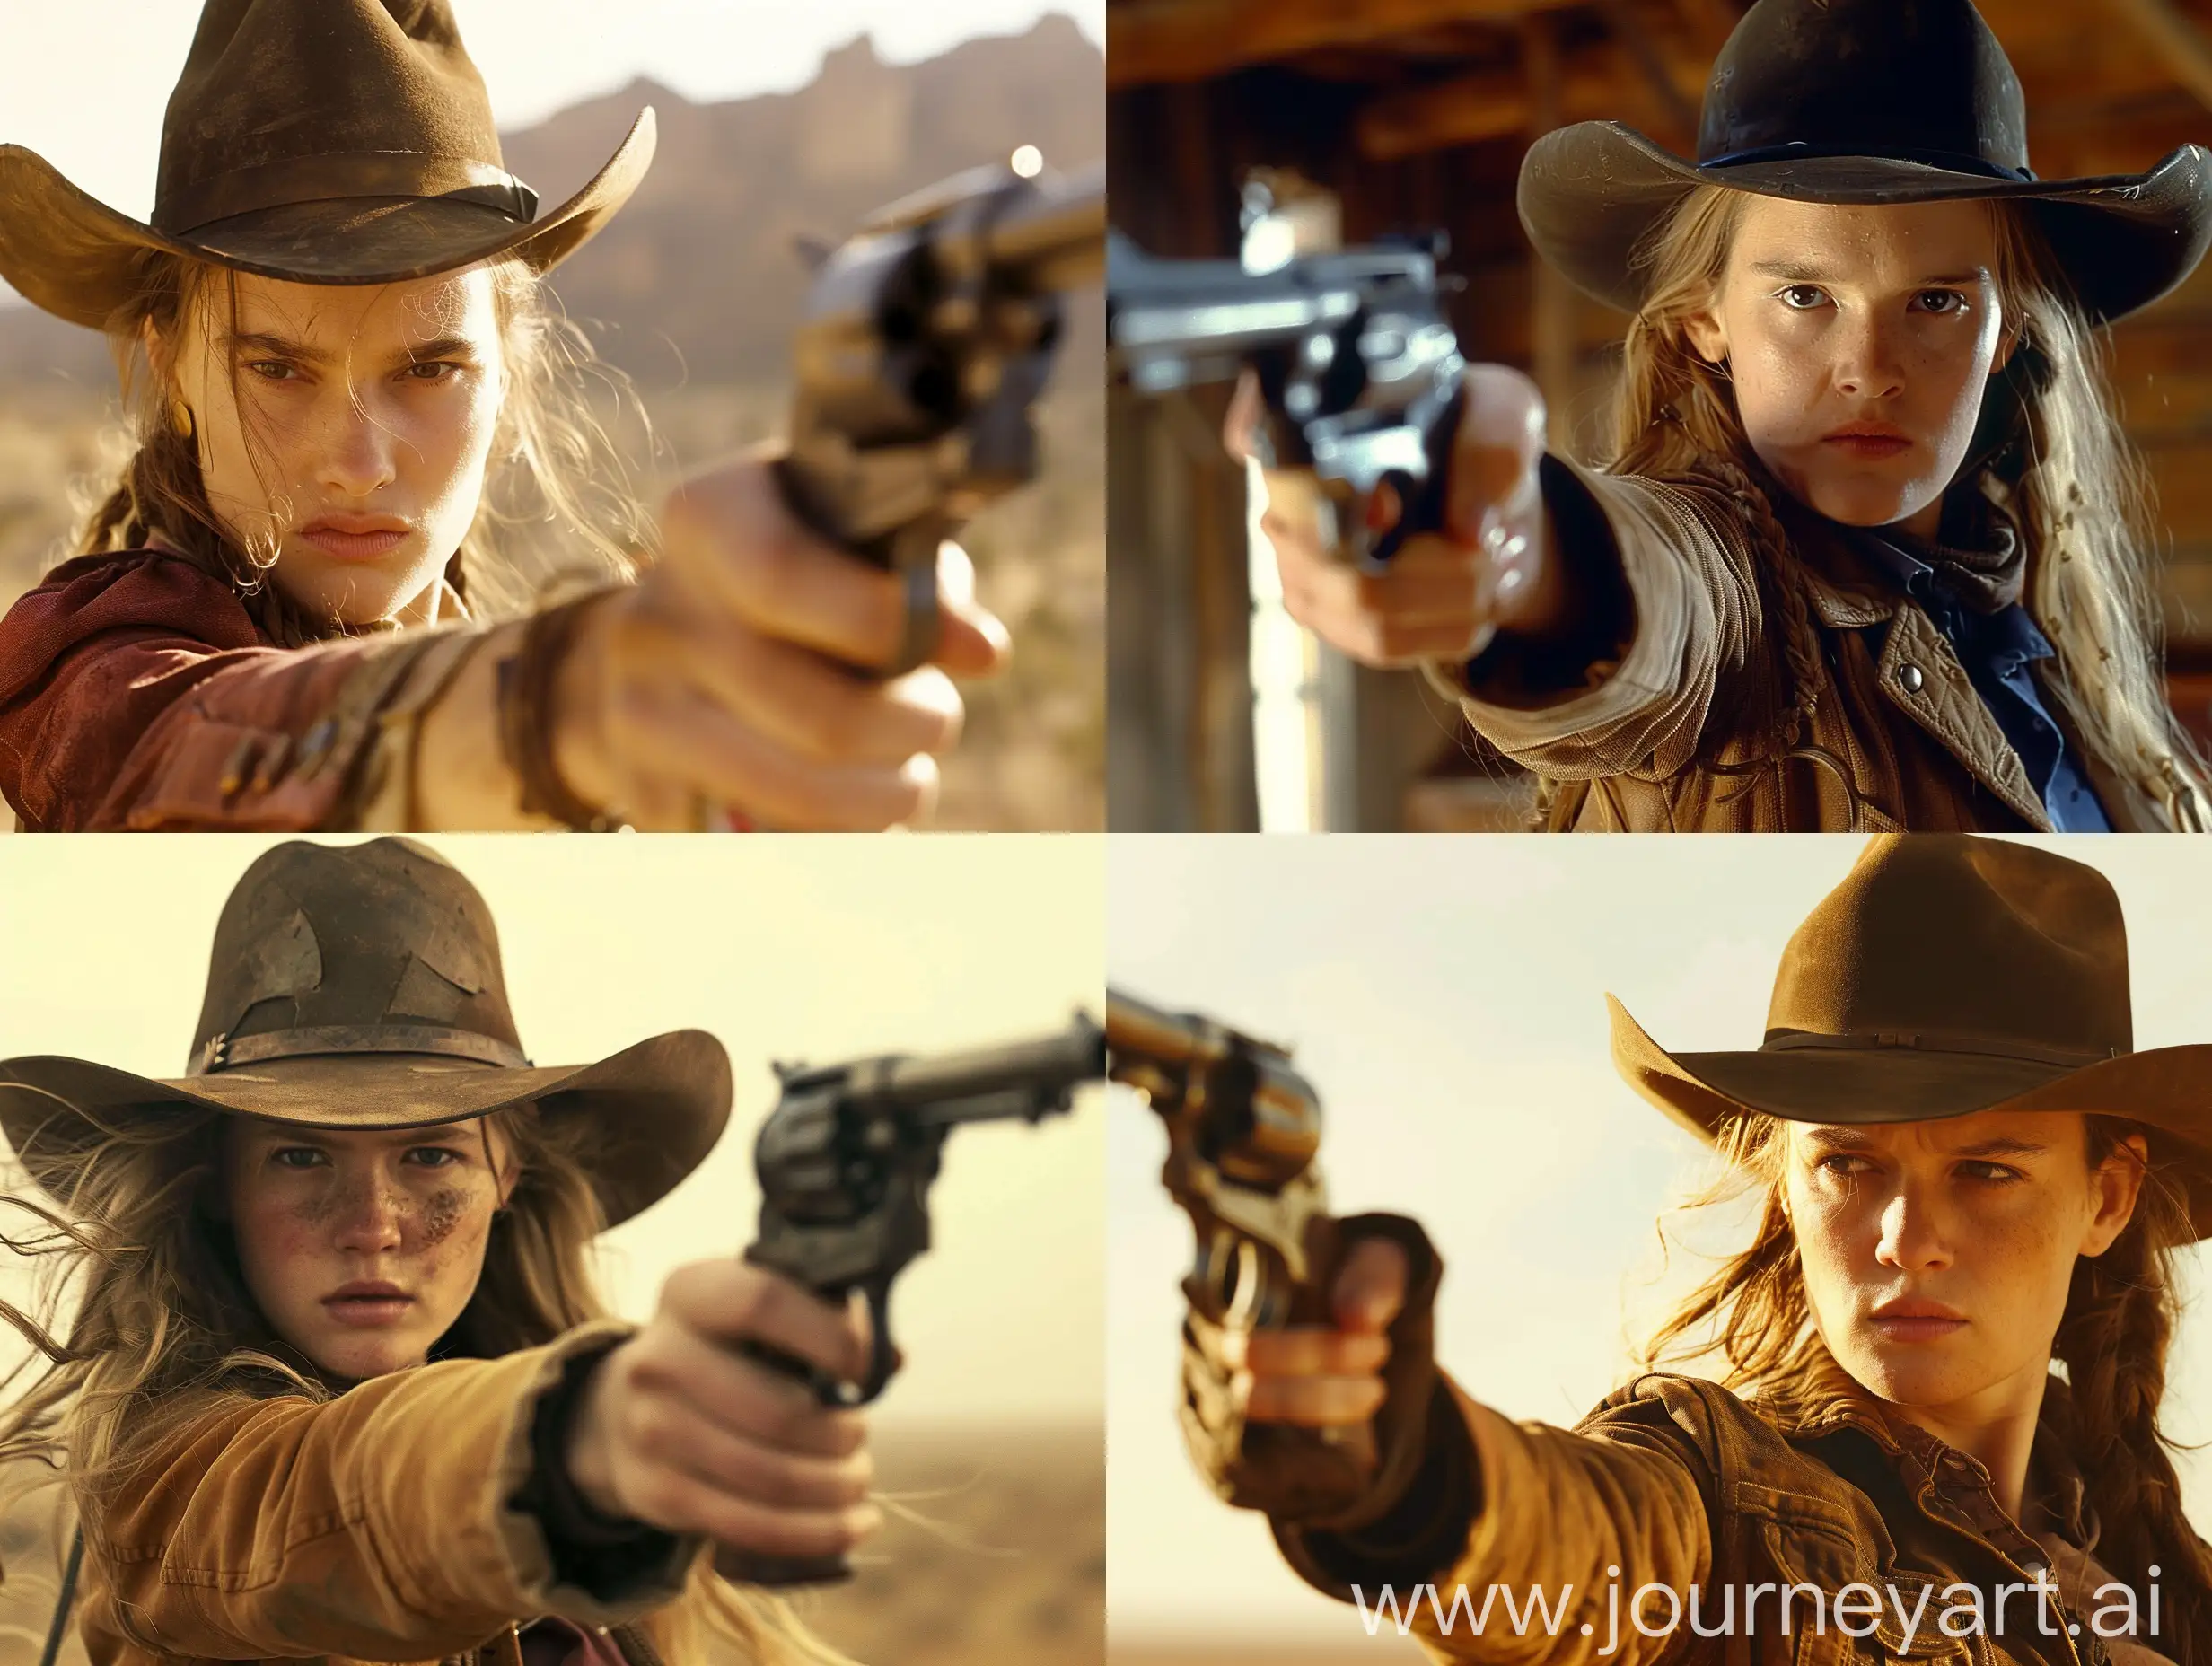 Quentin-Tarantino-Western-Film-Still-Young-Woman-in-Cowboy-Hat-with-Gun